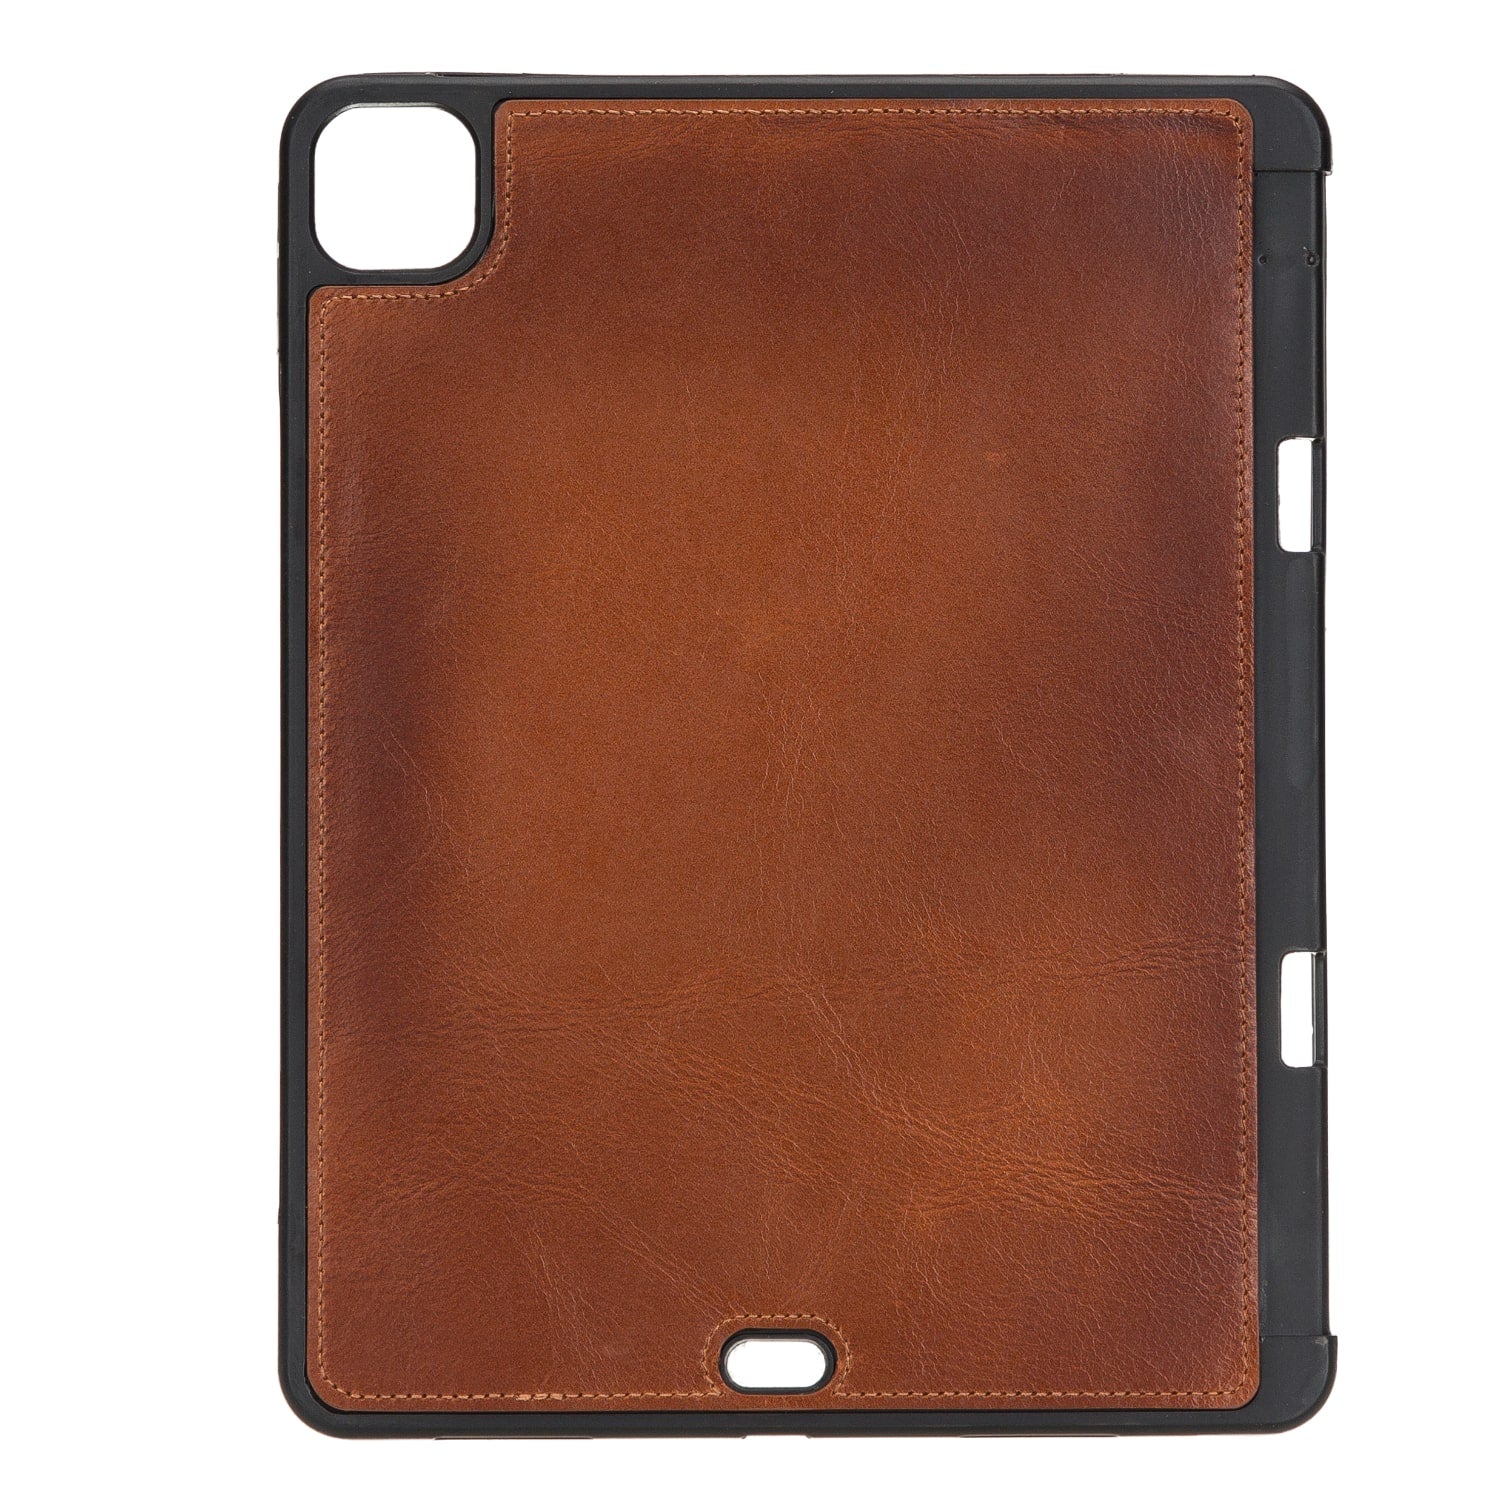 Brown Leather iPad Pro 11 Inc Smart Folio Case with Apple Pen Holder - Bomonti - 5